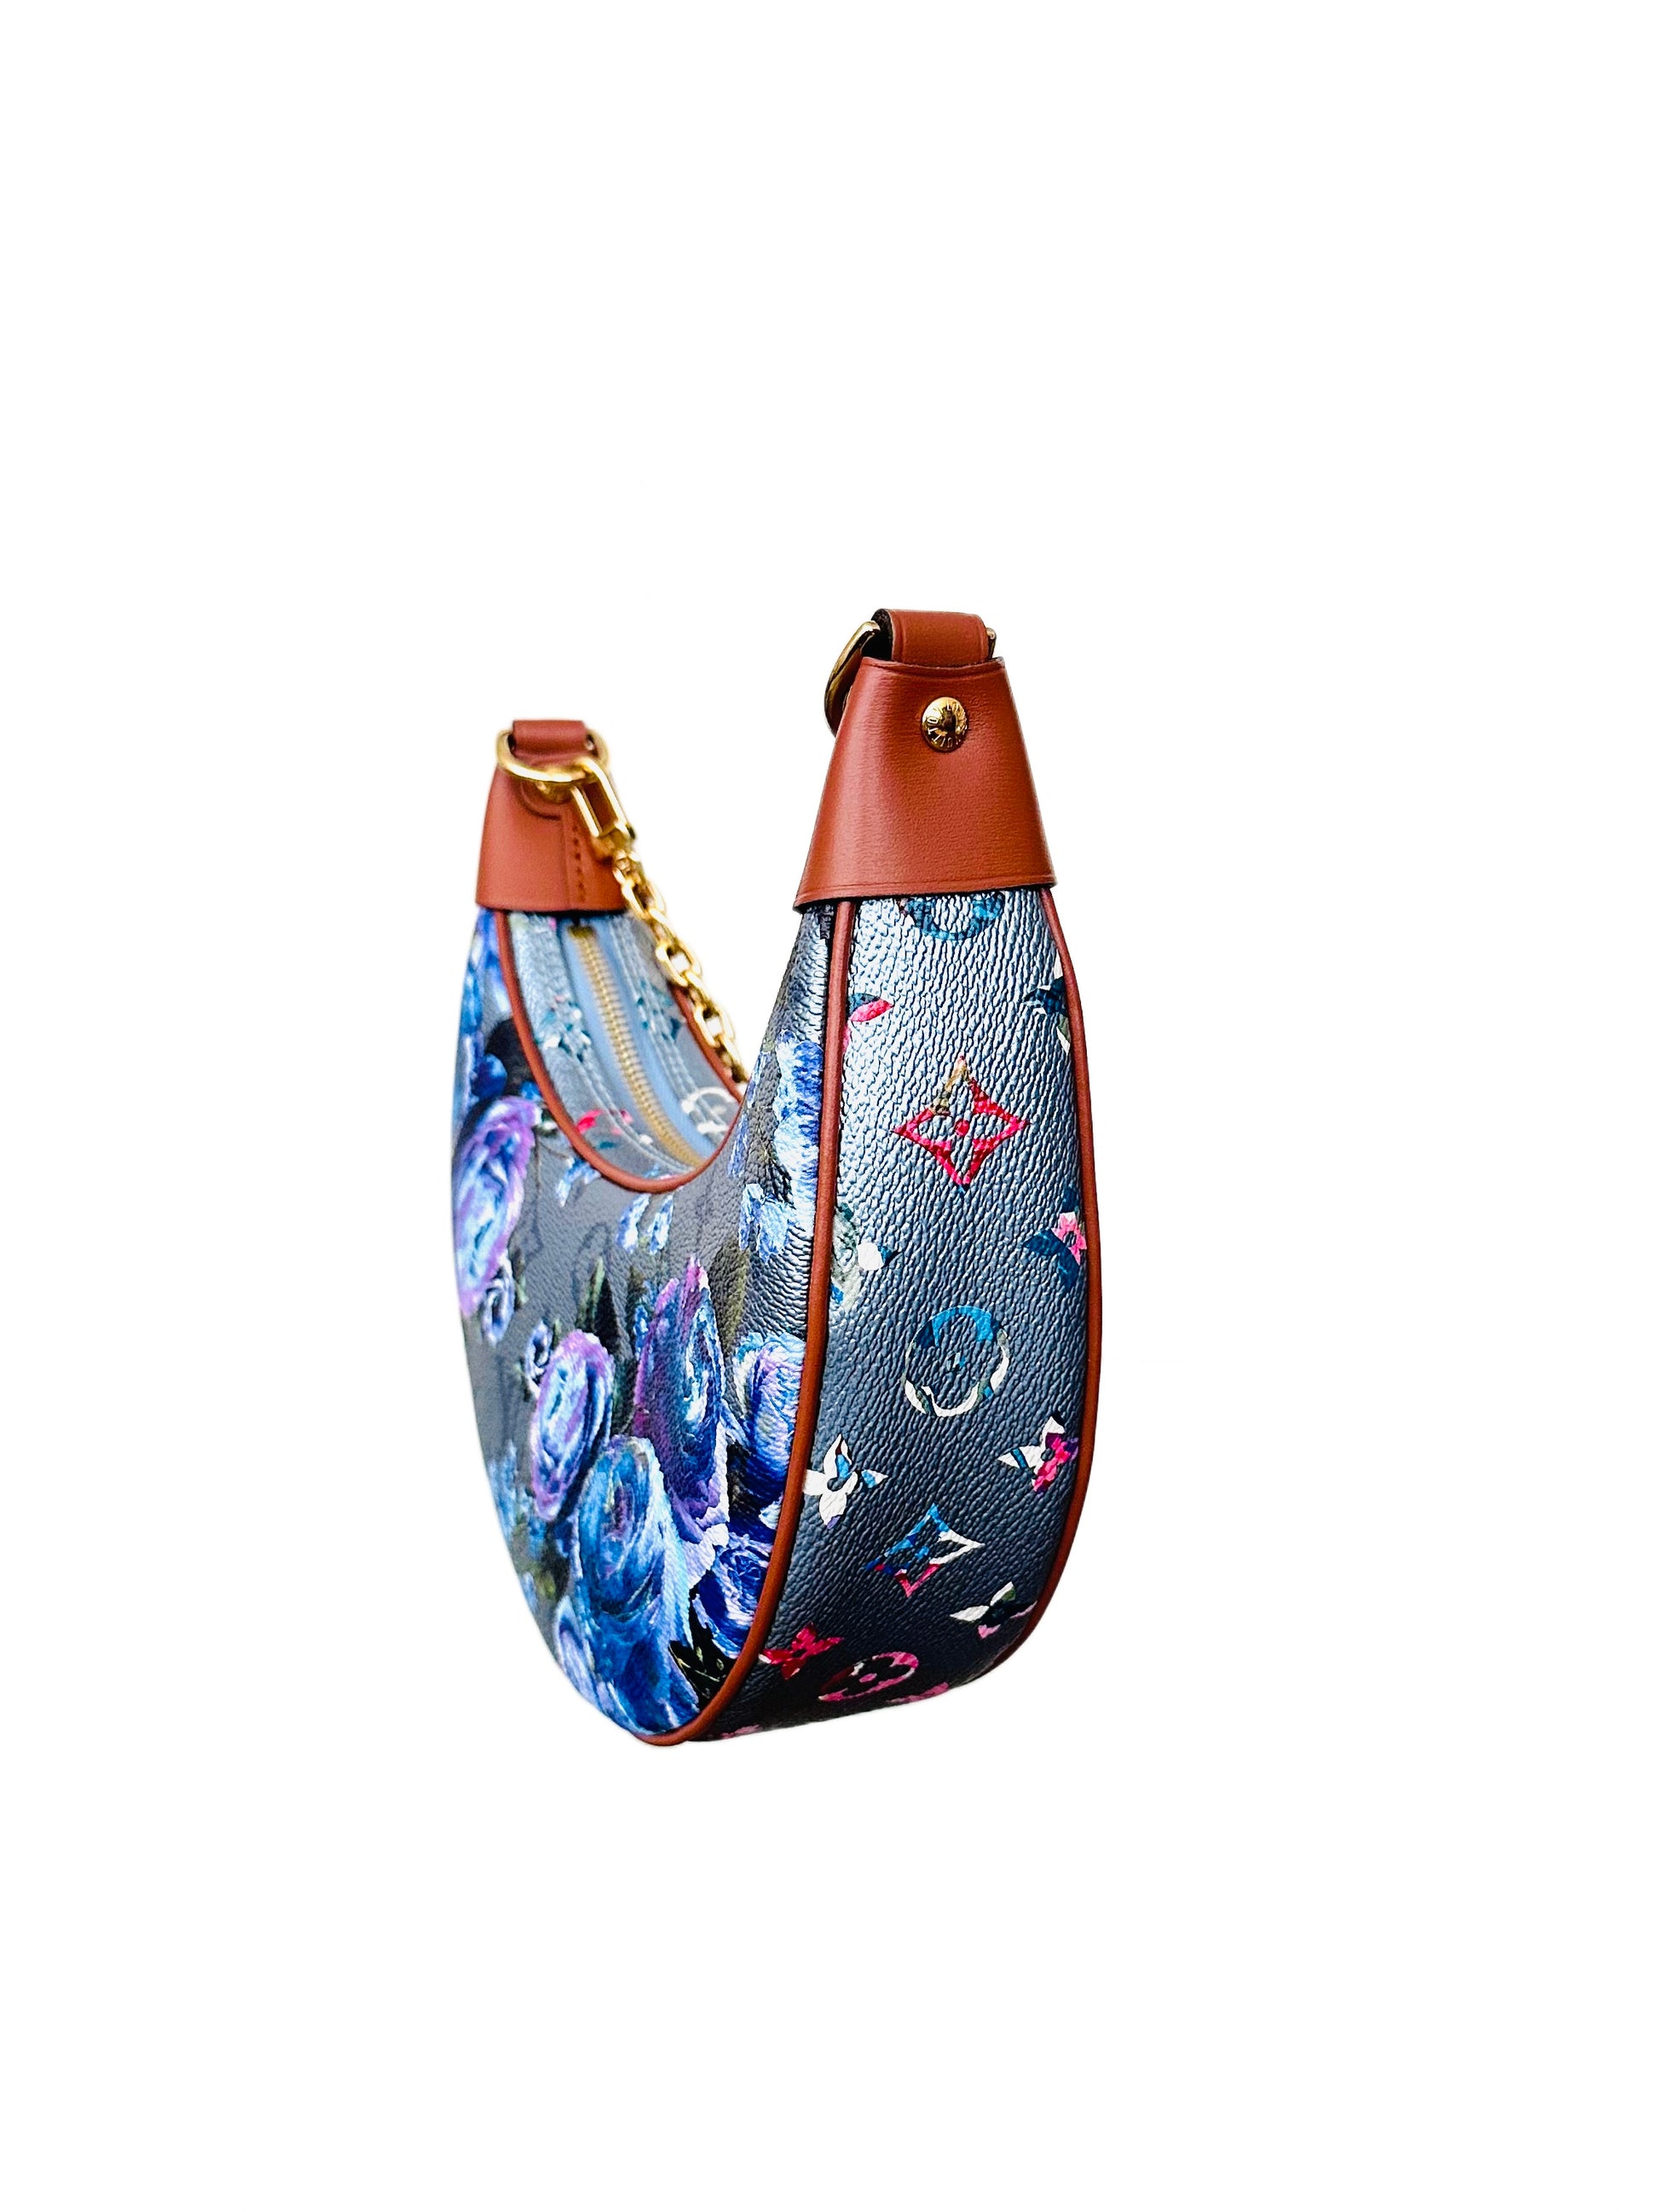 New! 2022 M21183 Louis Vuitton Loop Metallic Garden Bag Sold Out Authentic